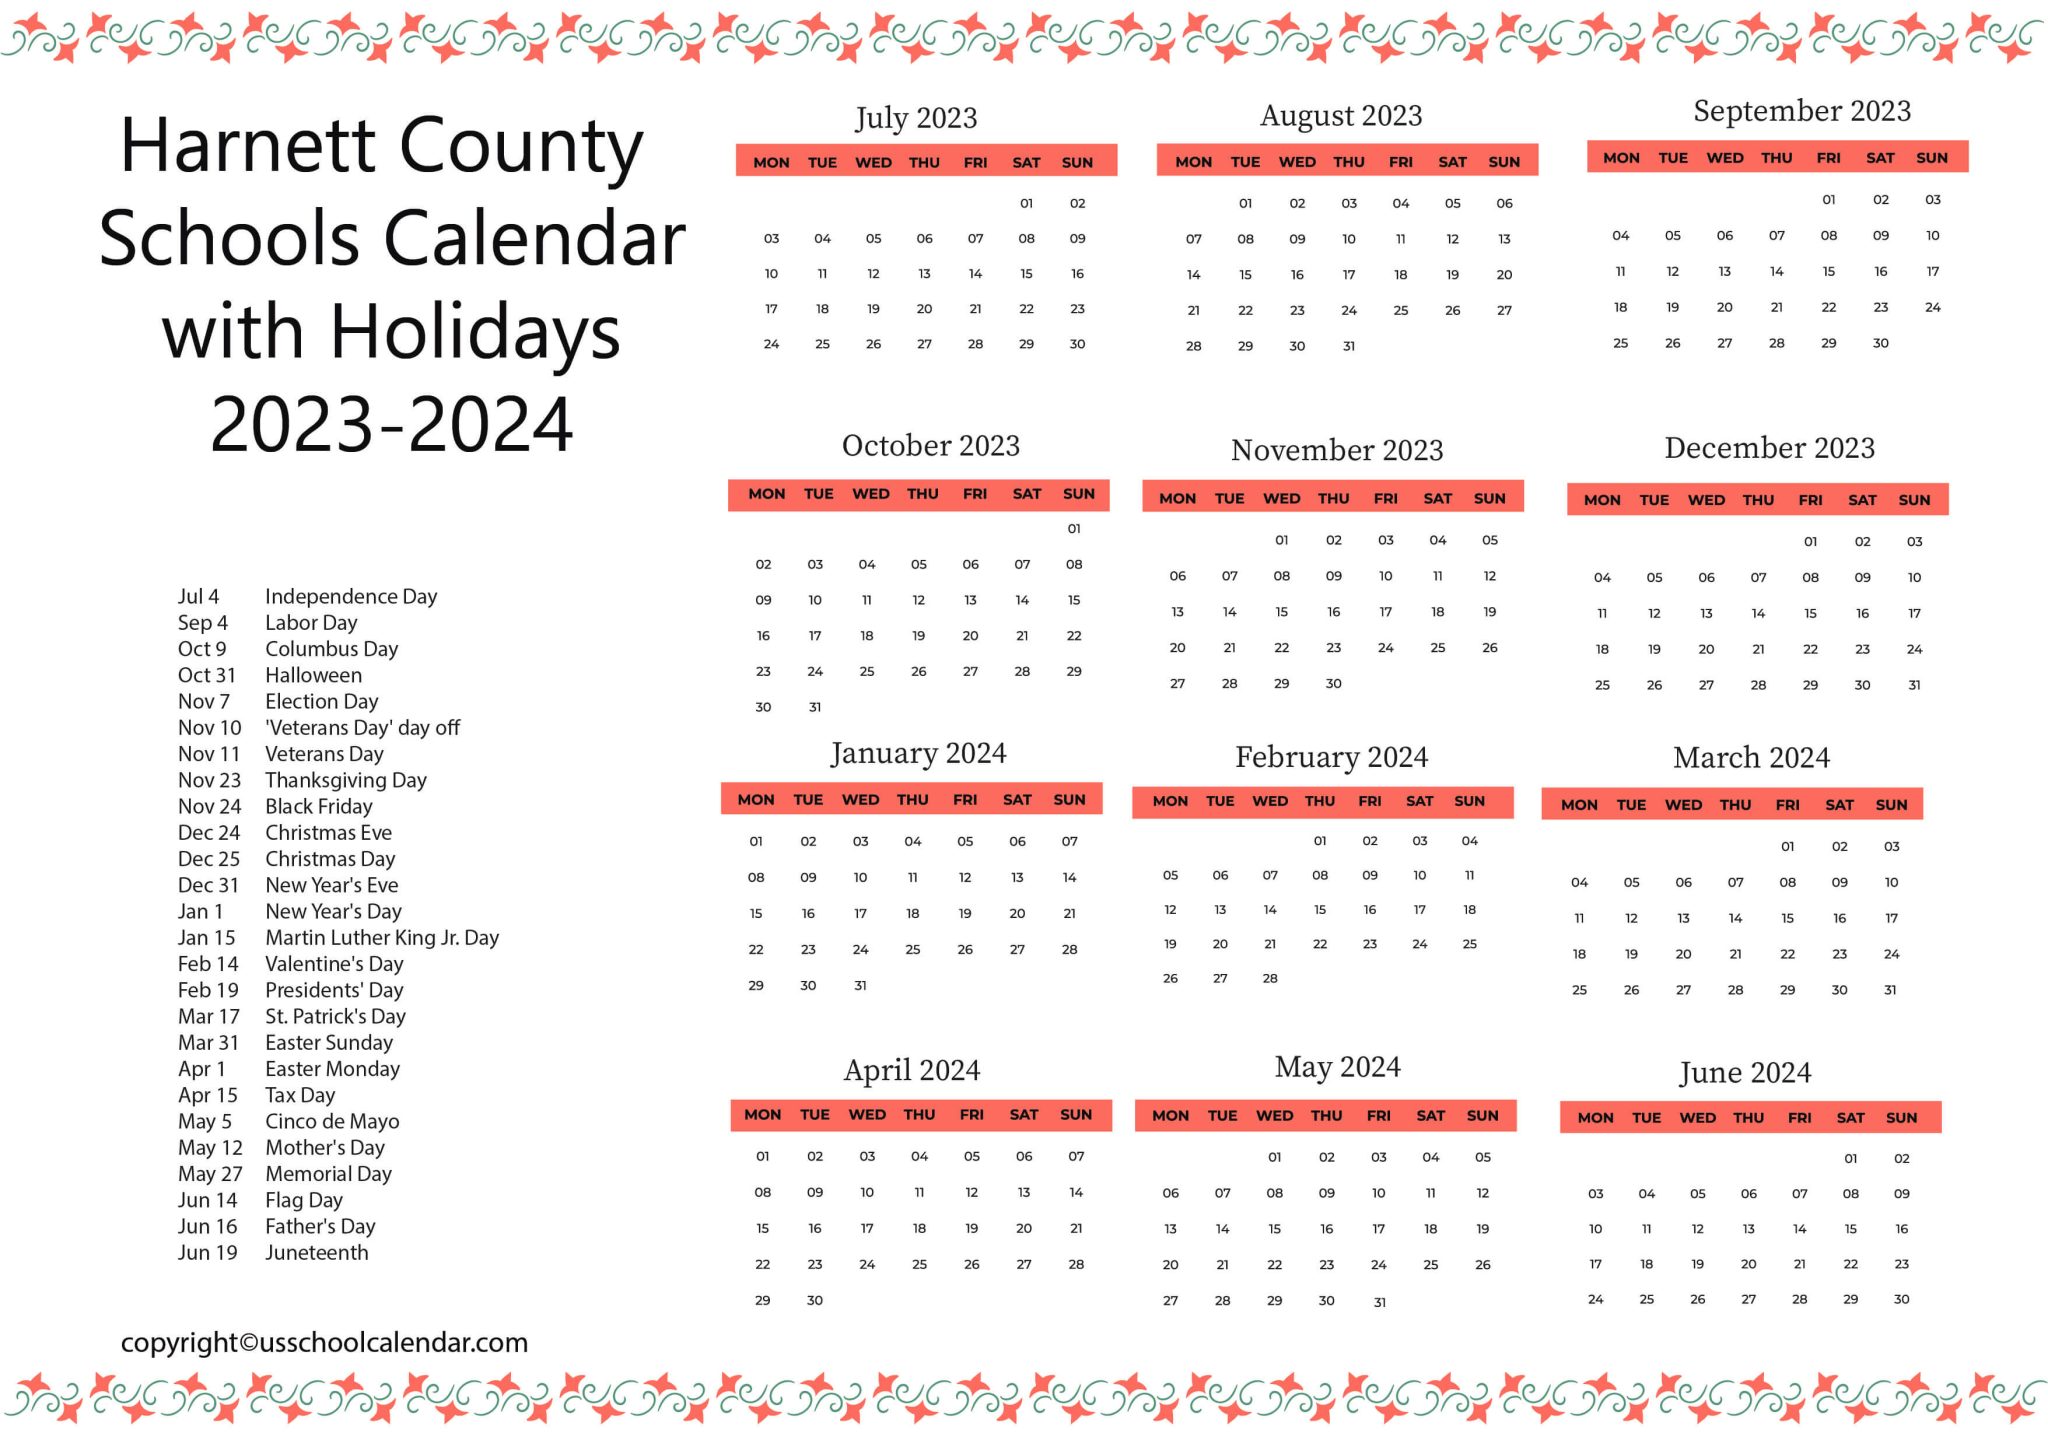 Harnett County Schools Calendar with Holidays 2023-2024